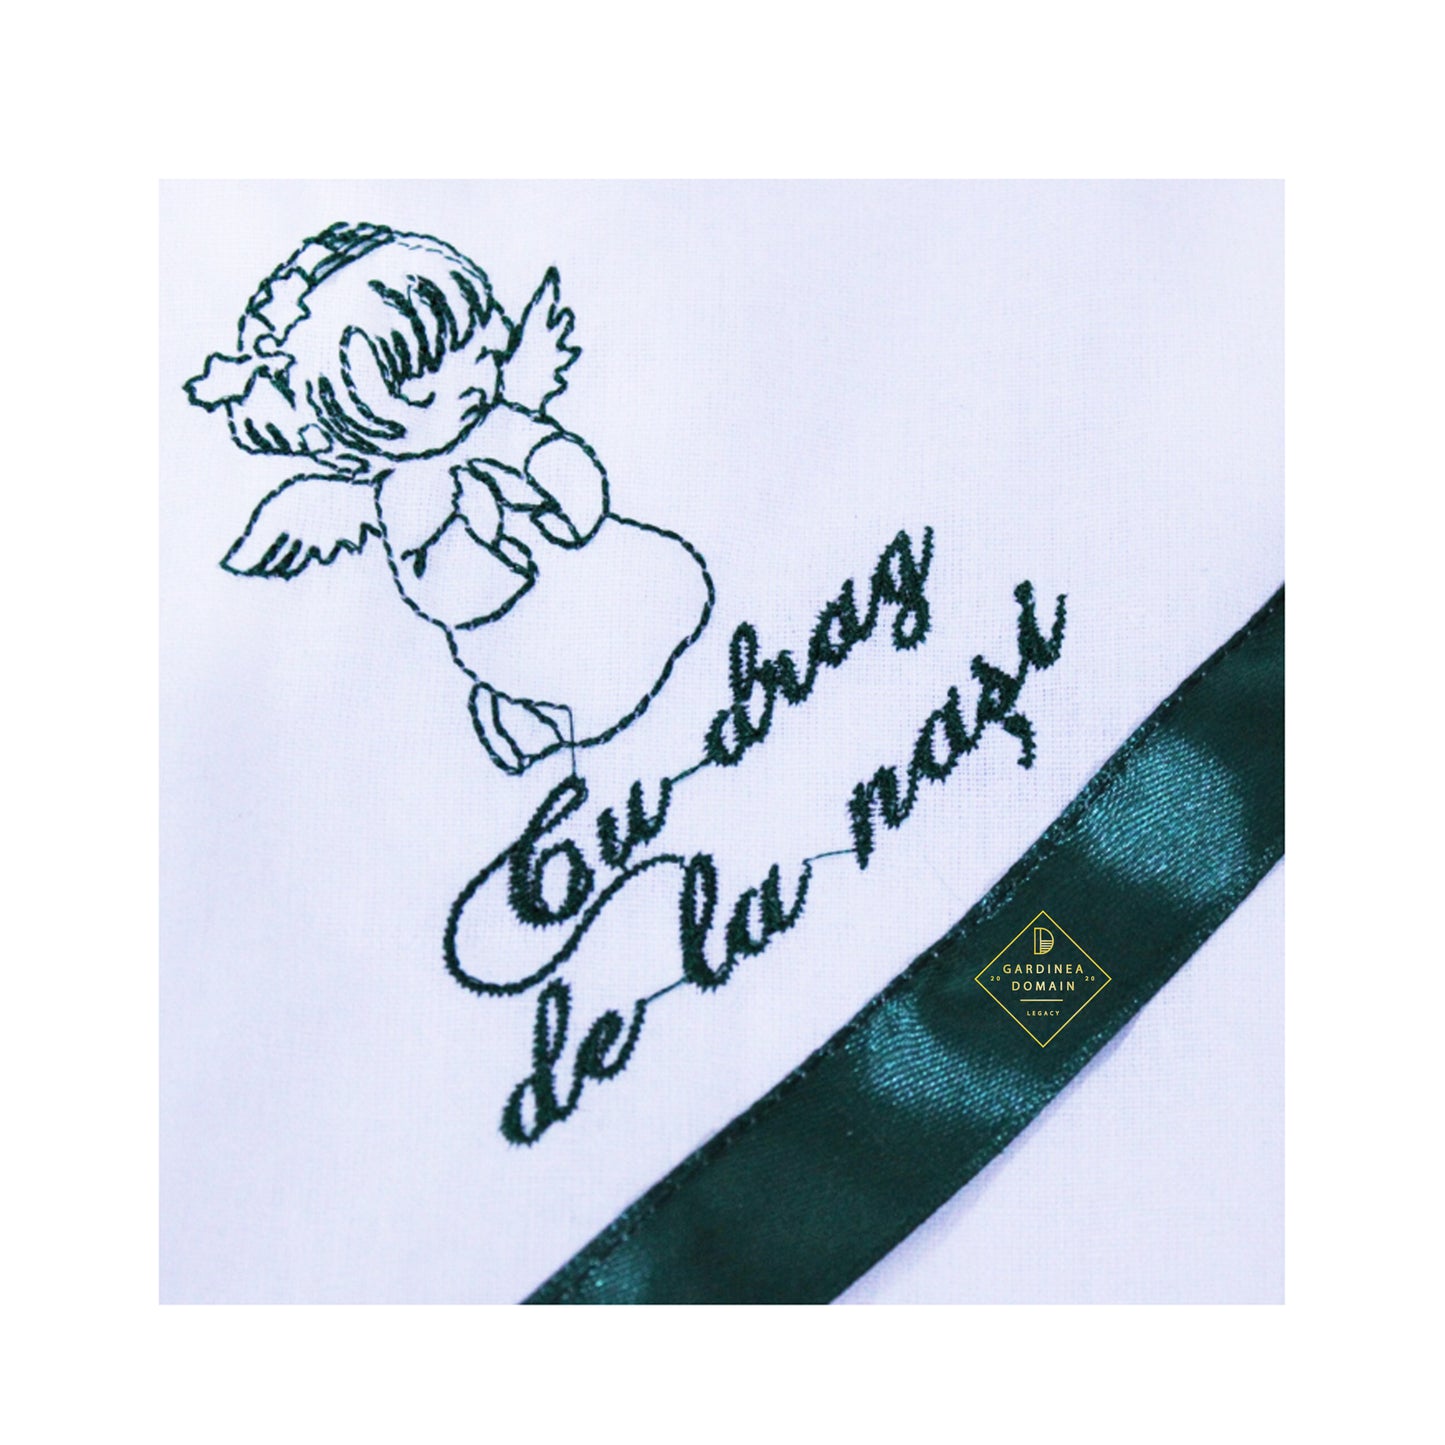 Trusou ingeras botez Gardinea Domain® 6 piese, in cutie cadou, bumbac 100%, personalizat brodat cu mesajul "Cu drag de la nasi!", verde